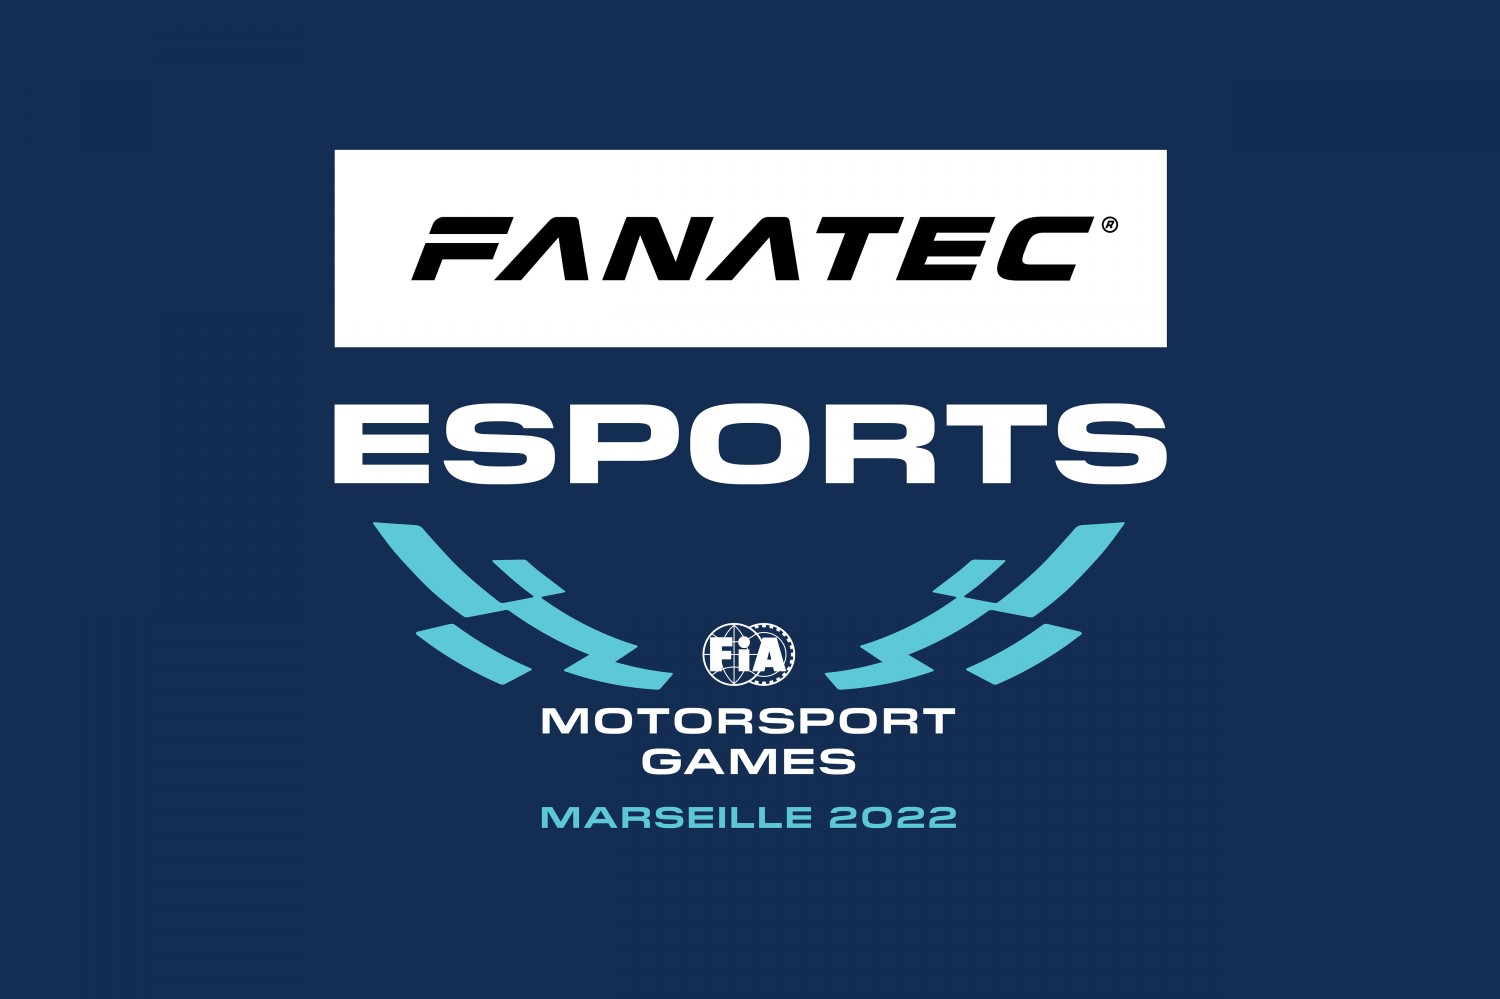 More information about "Fanatec è partner hardware dei FIA Motorsport Games Esports"